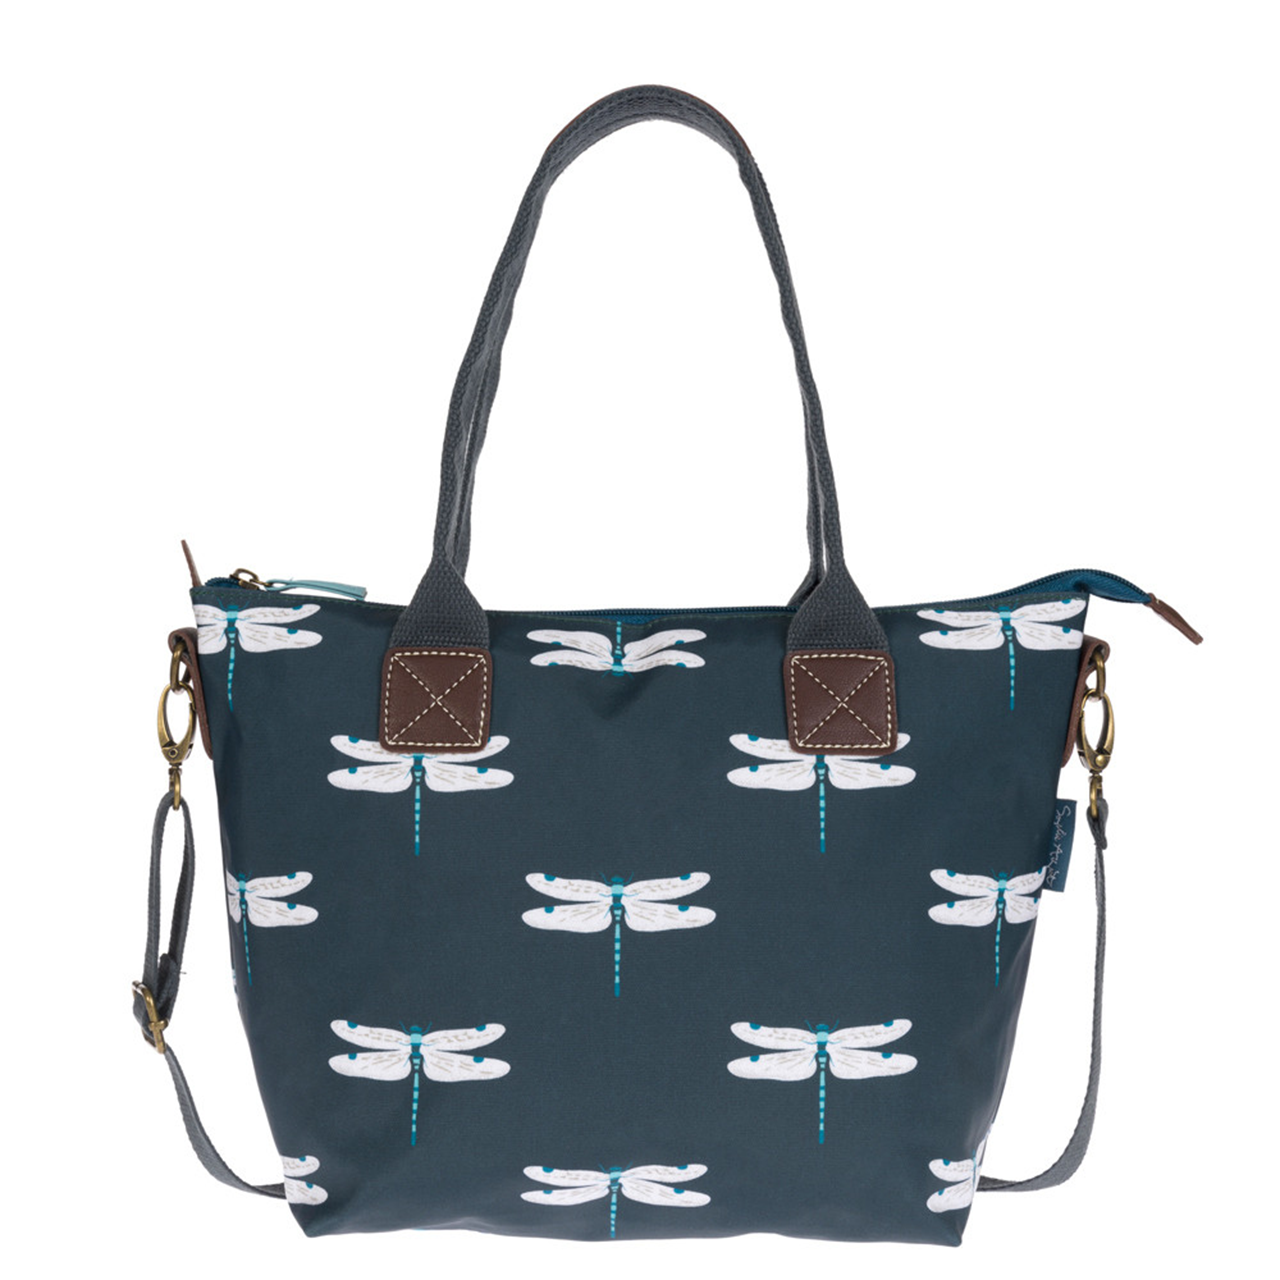 Dragonfly Bag - Gioa Fashion Designer - High quality leather bags